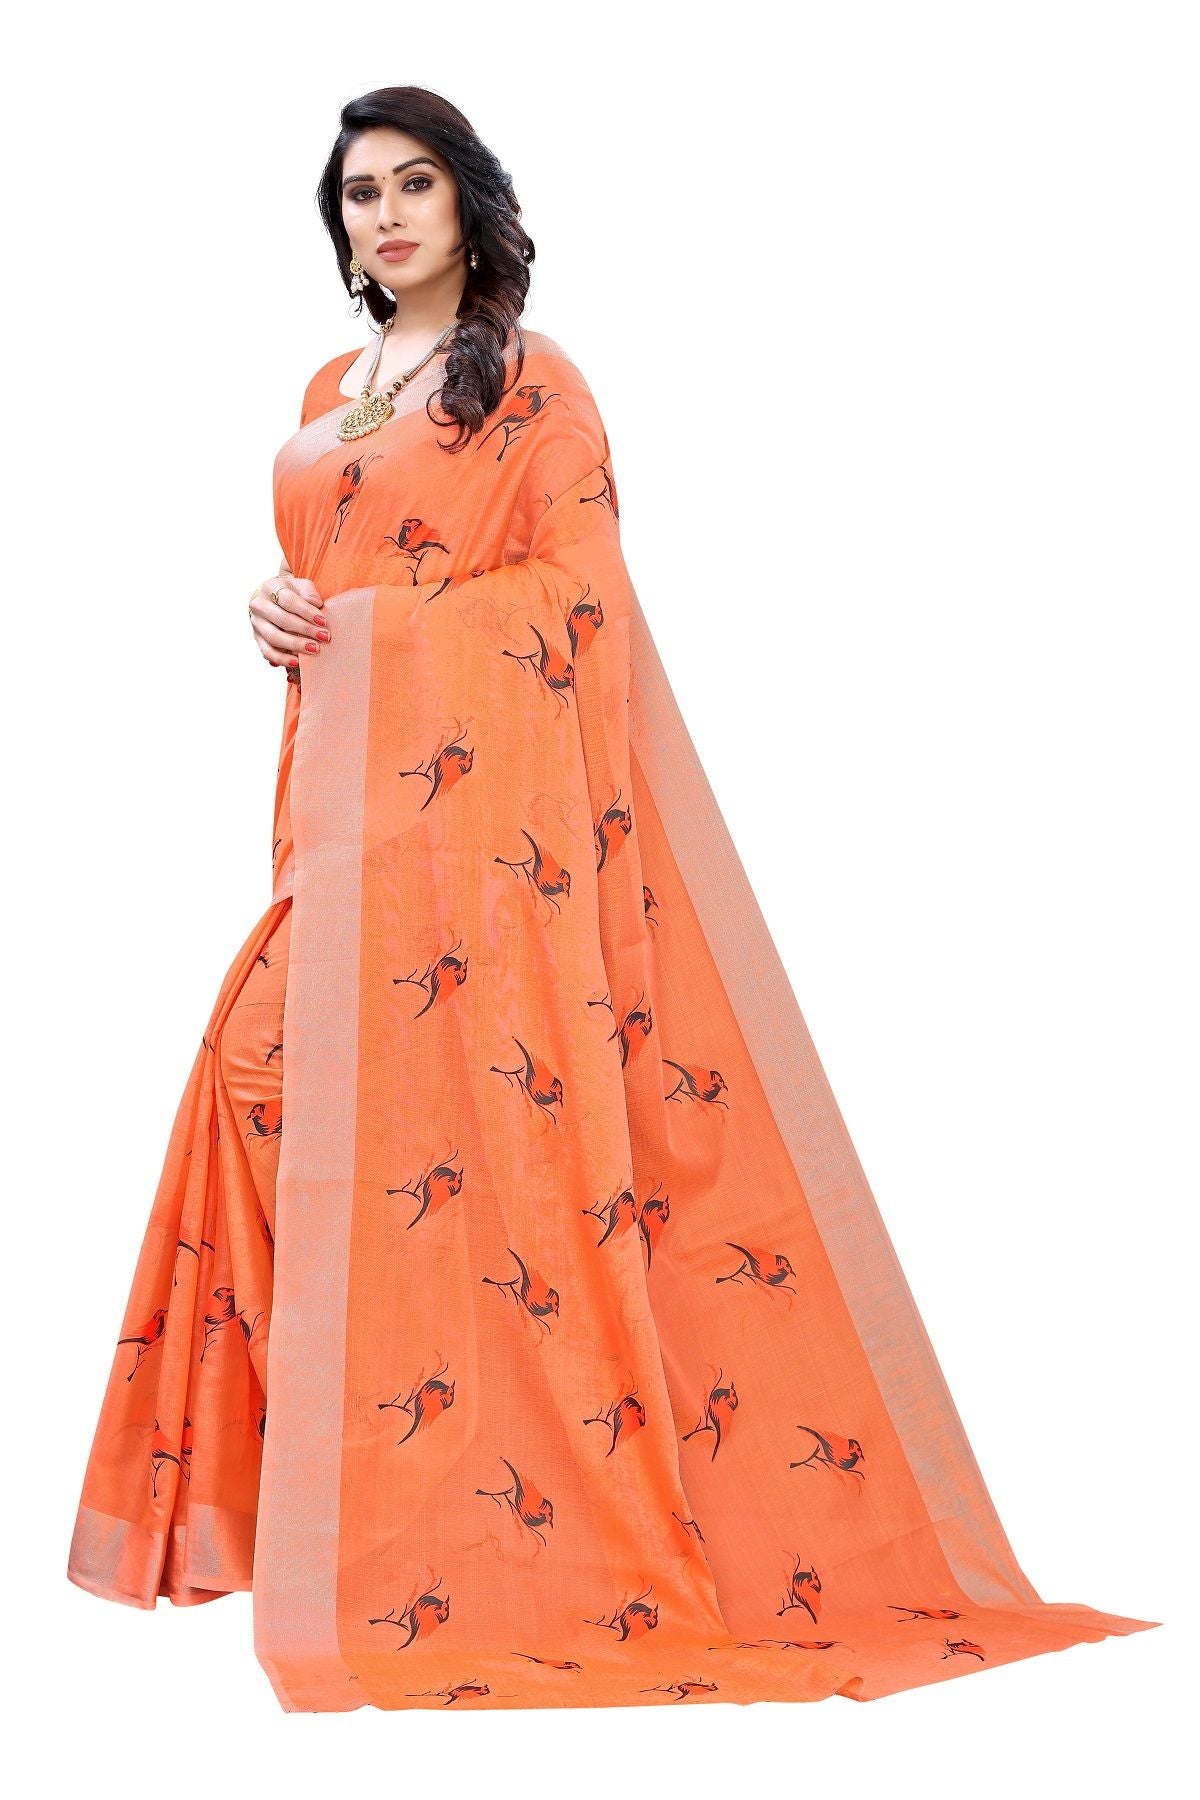 Women's Orange Chanderi Designer Saree - Vamika